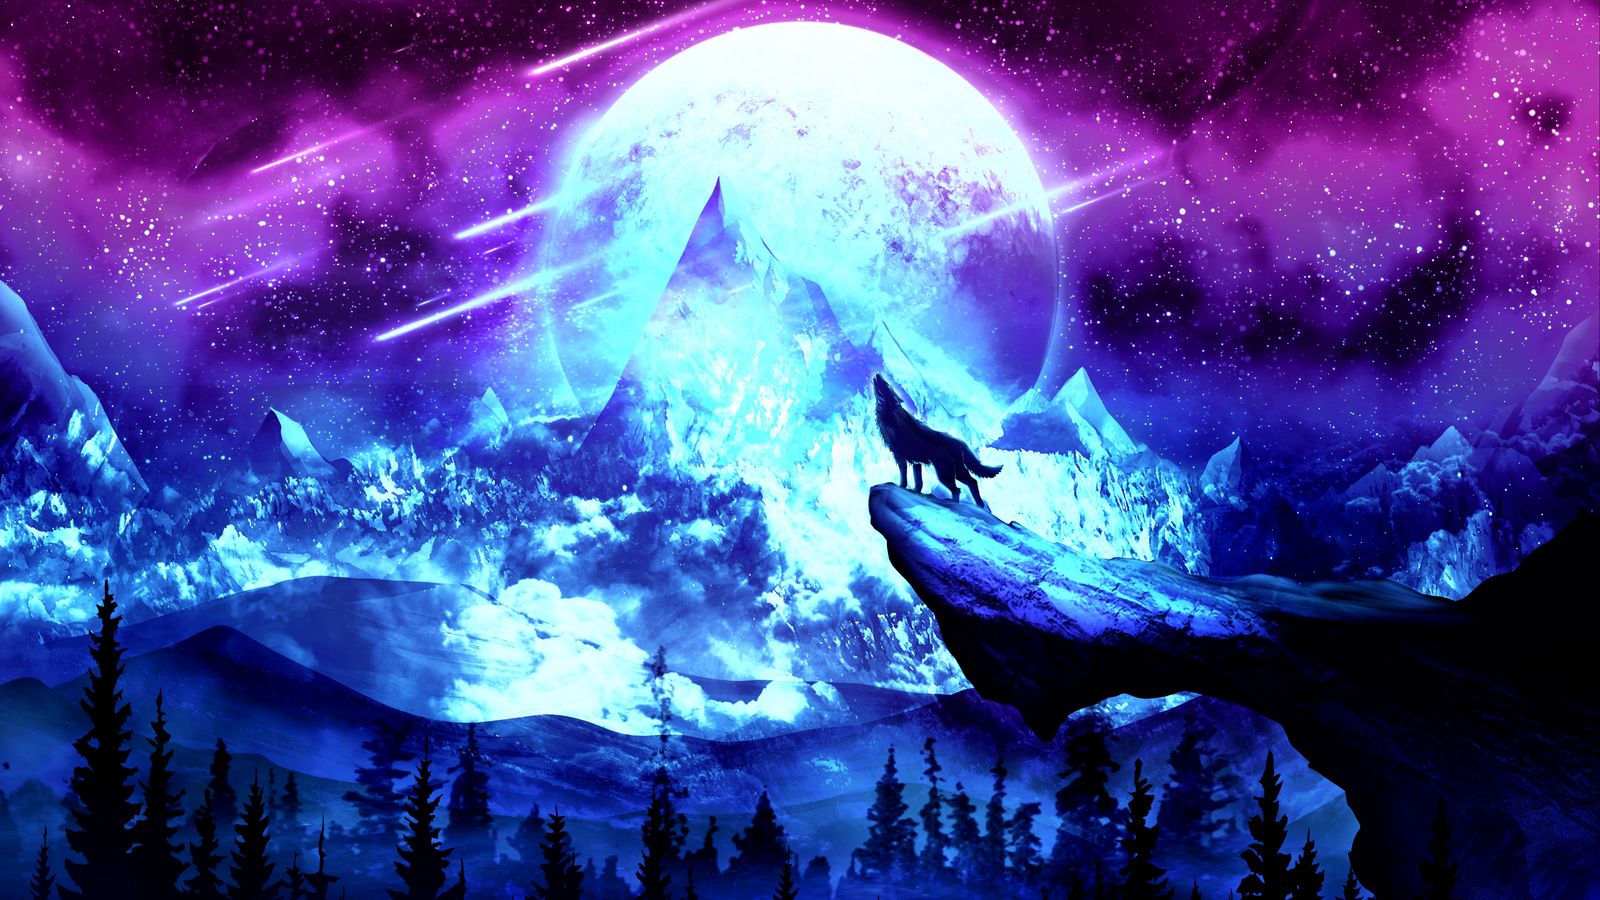 Download wallpaper 1600x900 wolf, moon, night, mountains, art widescreen  16:9 hd background